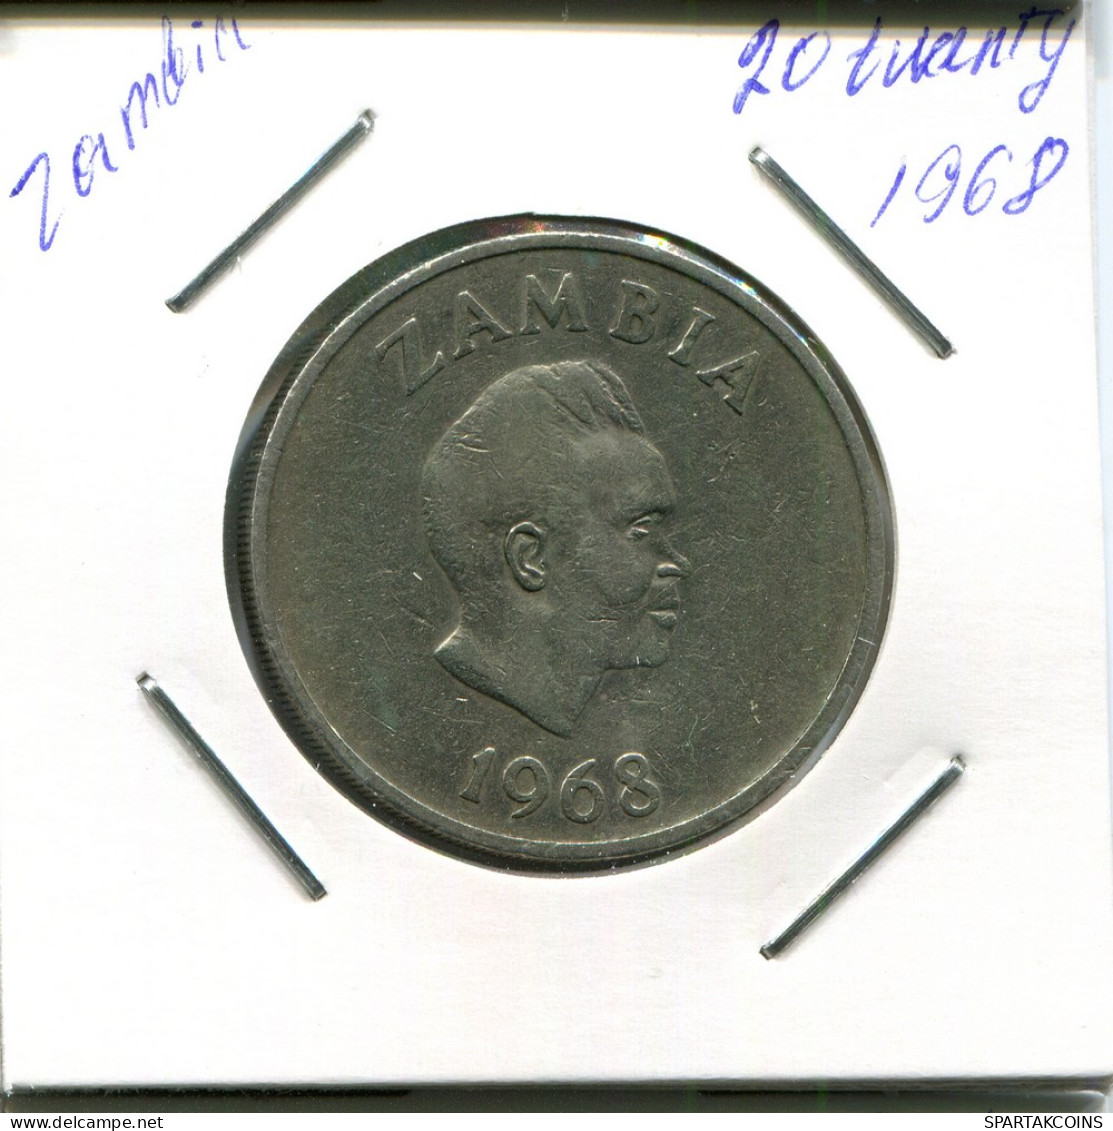 20 NGWEE 1968 ZAMBIA Coin #AN697.U - Sambia